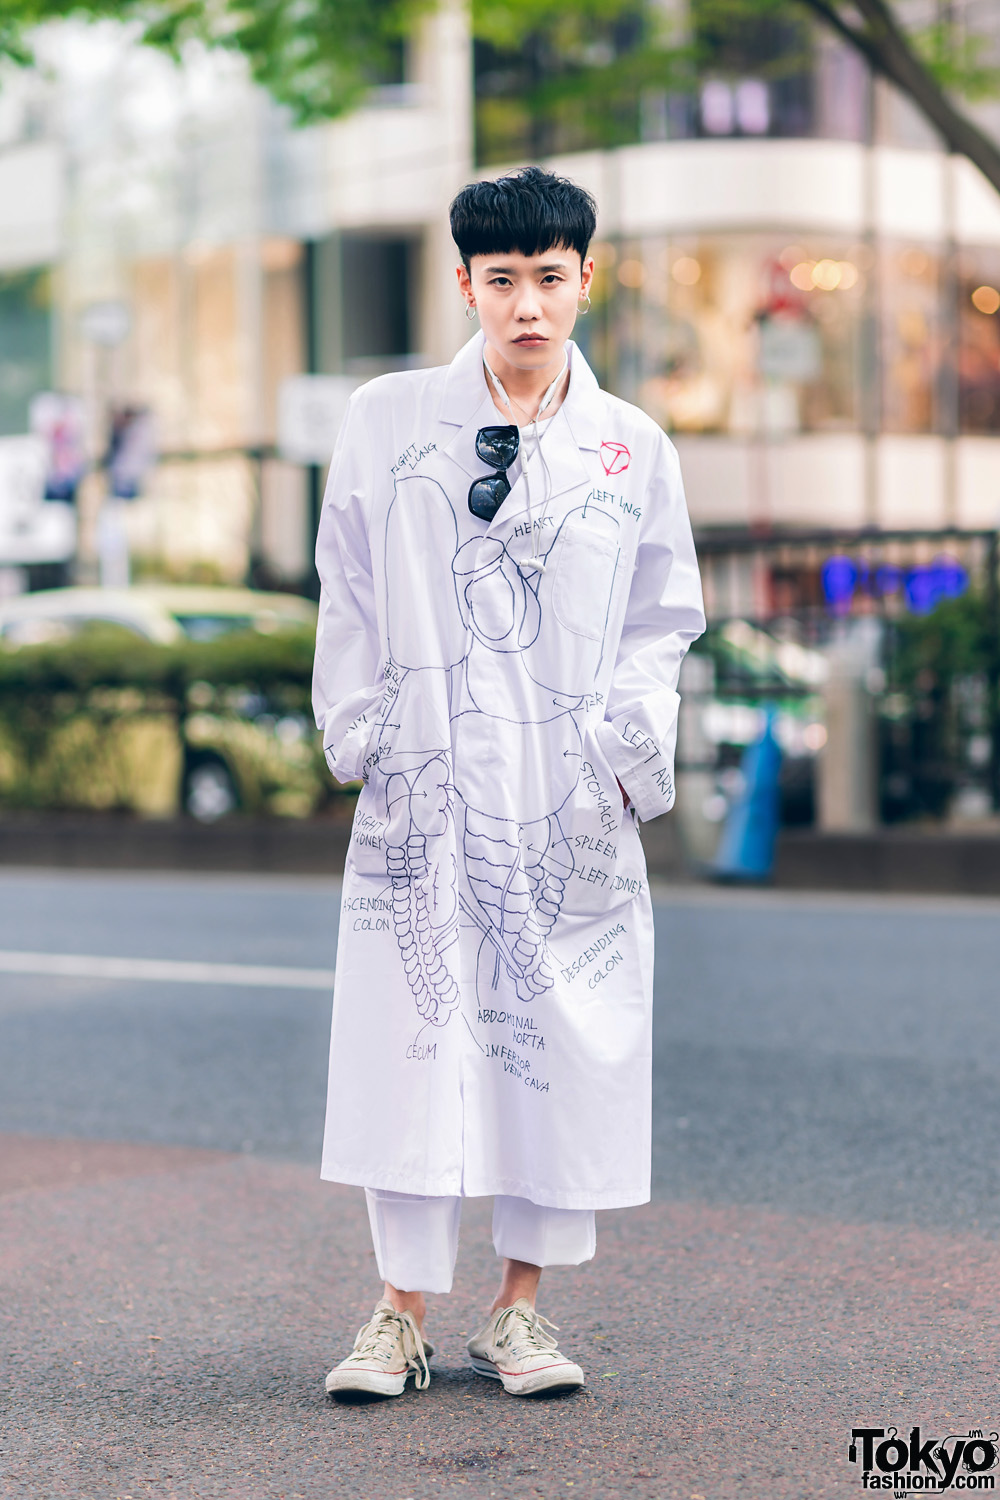 The Symbolic Tokyo Designer w/ Black Sunglasses, TST Anatomy Art Lab Coat, Cuffed Pants ; Vintage Converse Sneakers